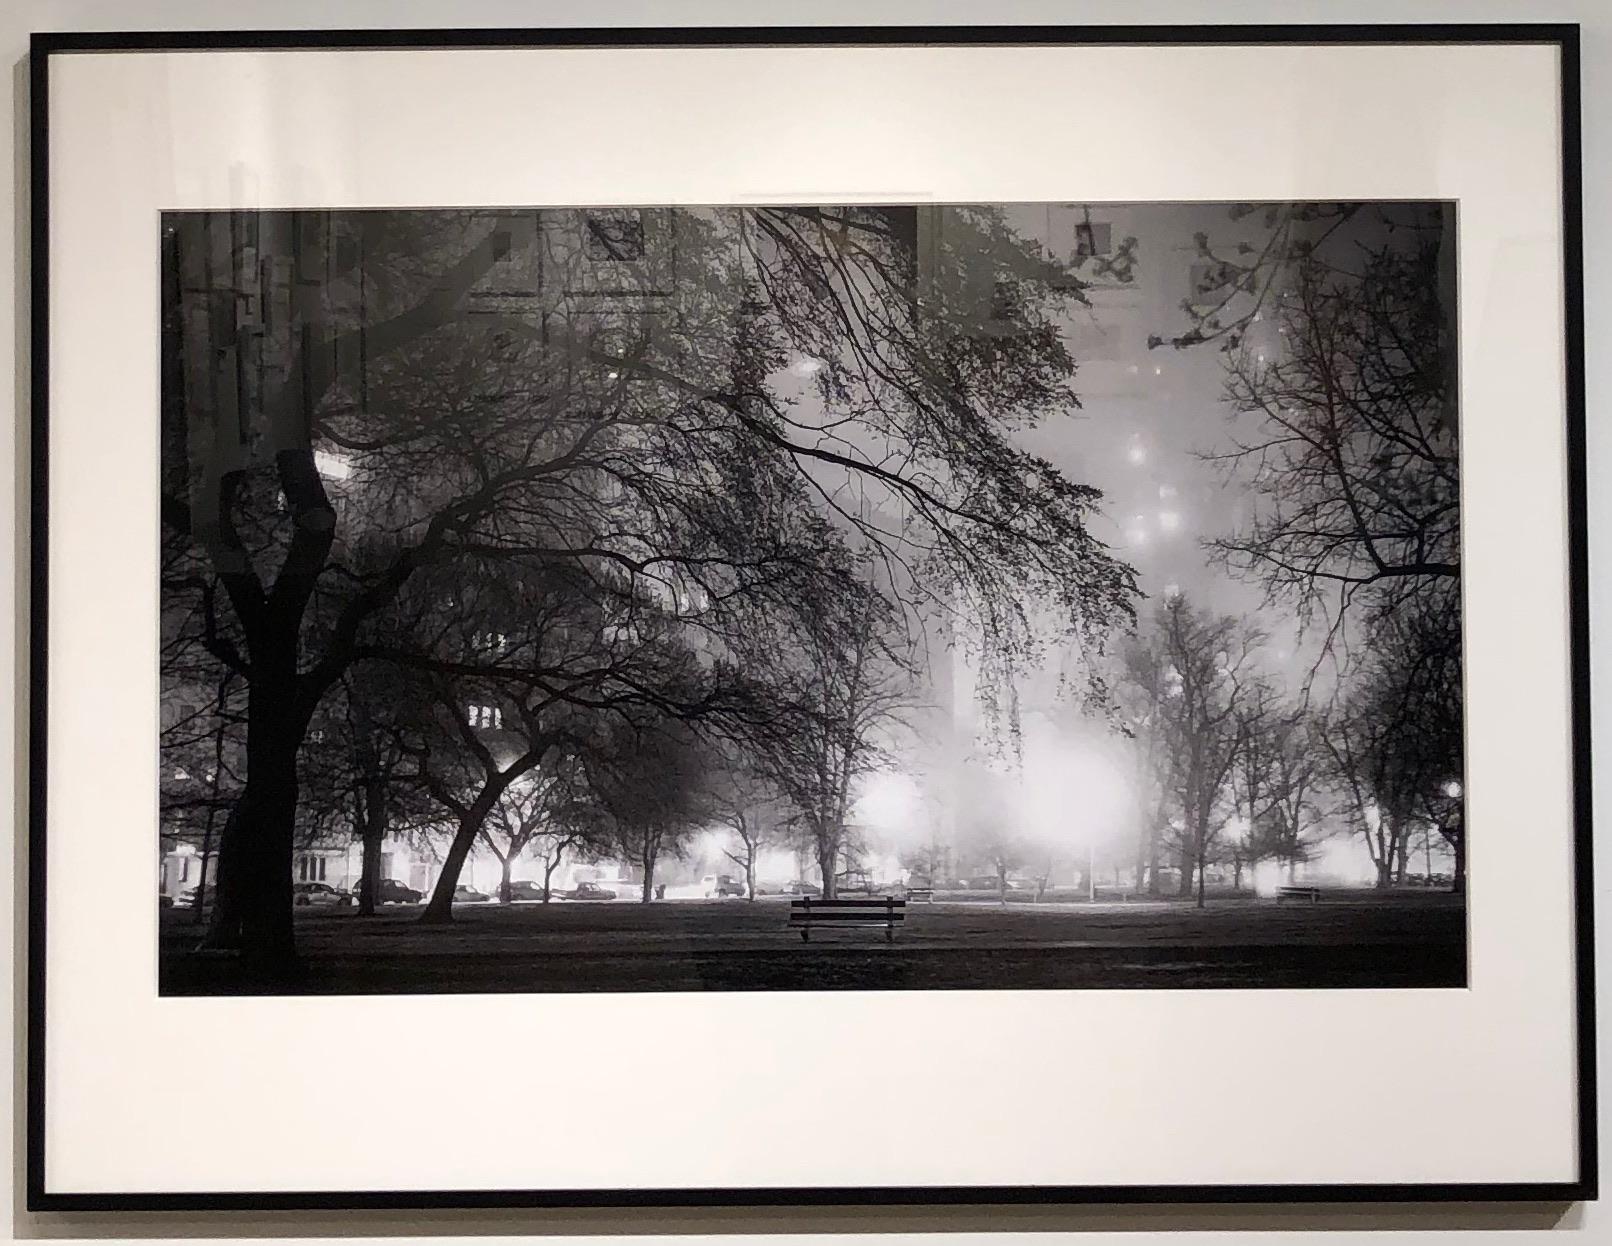 Lincoln Park Fog, Chicago, Nightfall in the Park w Street Lights Casting Shadows - Photograph by Kirill Polevoy